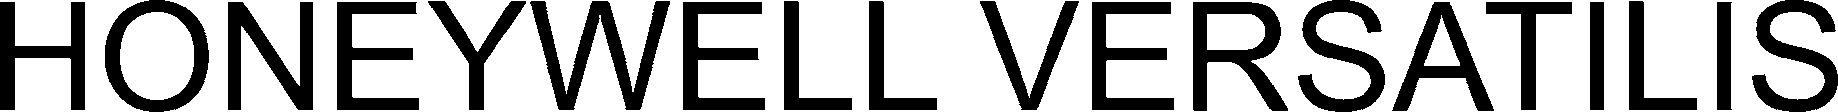 Trademark Logo HONEYWELL VERSATILIS